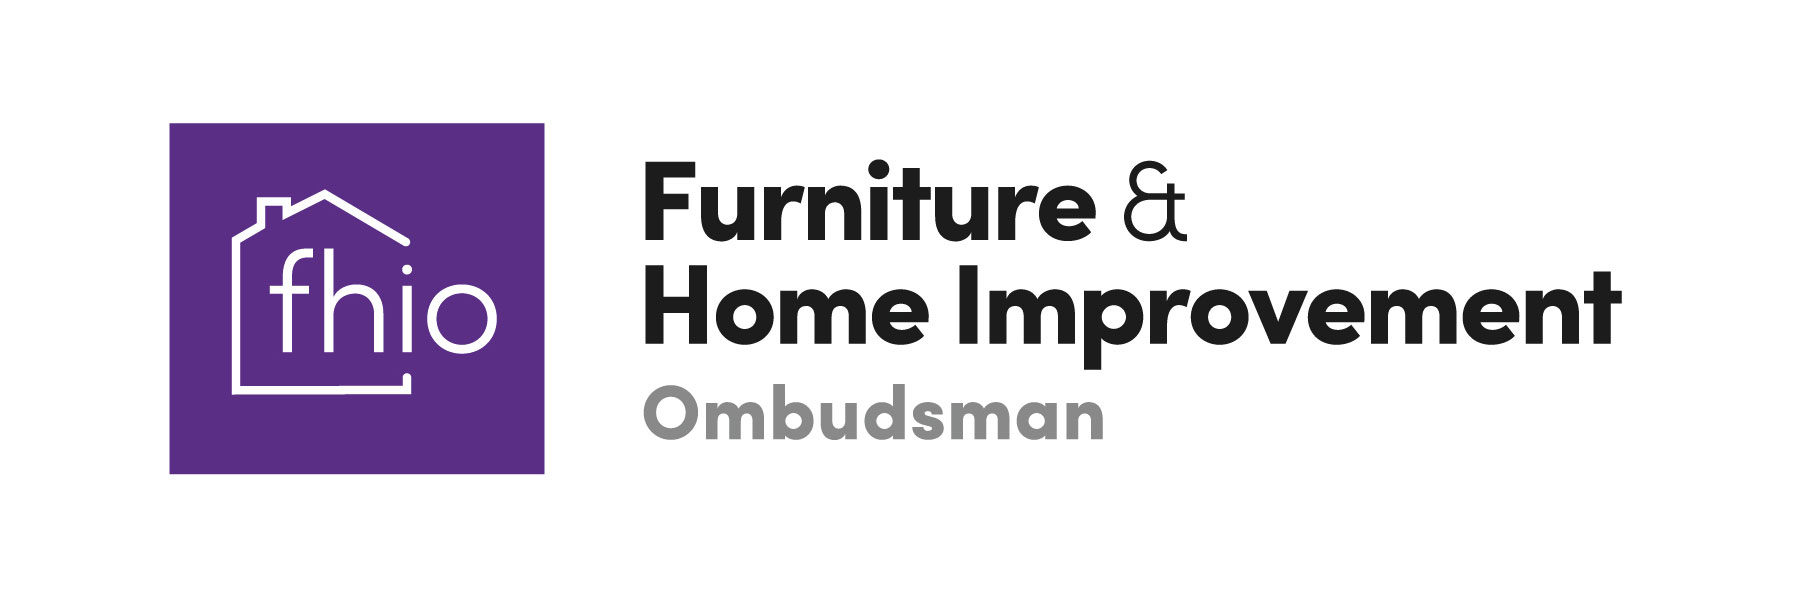 The Furniture & Home Improvement Ombudsman logo